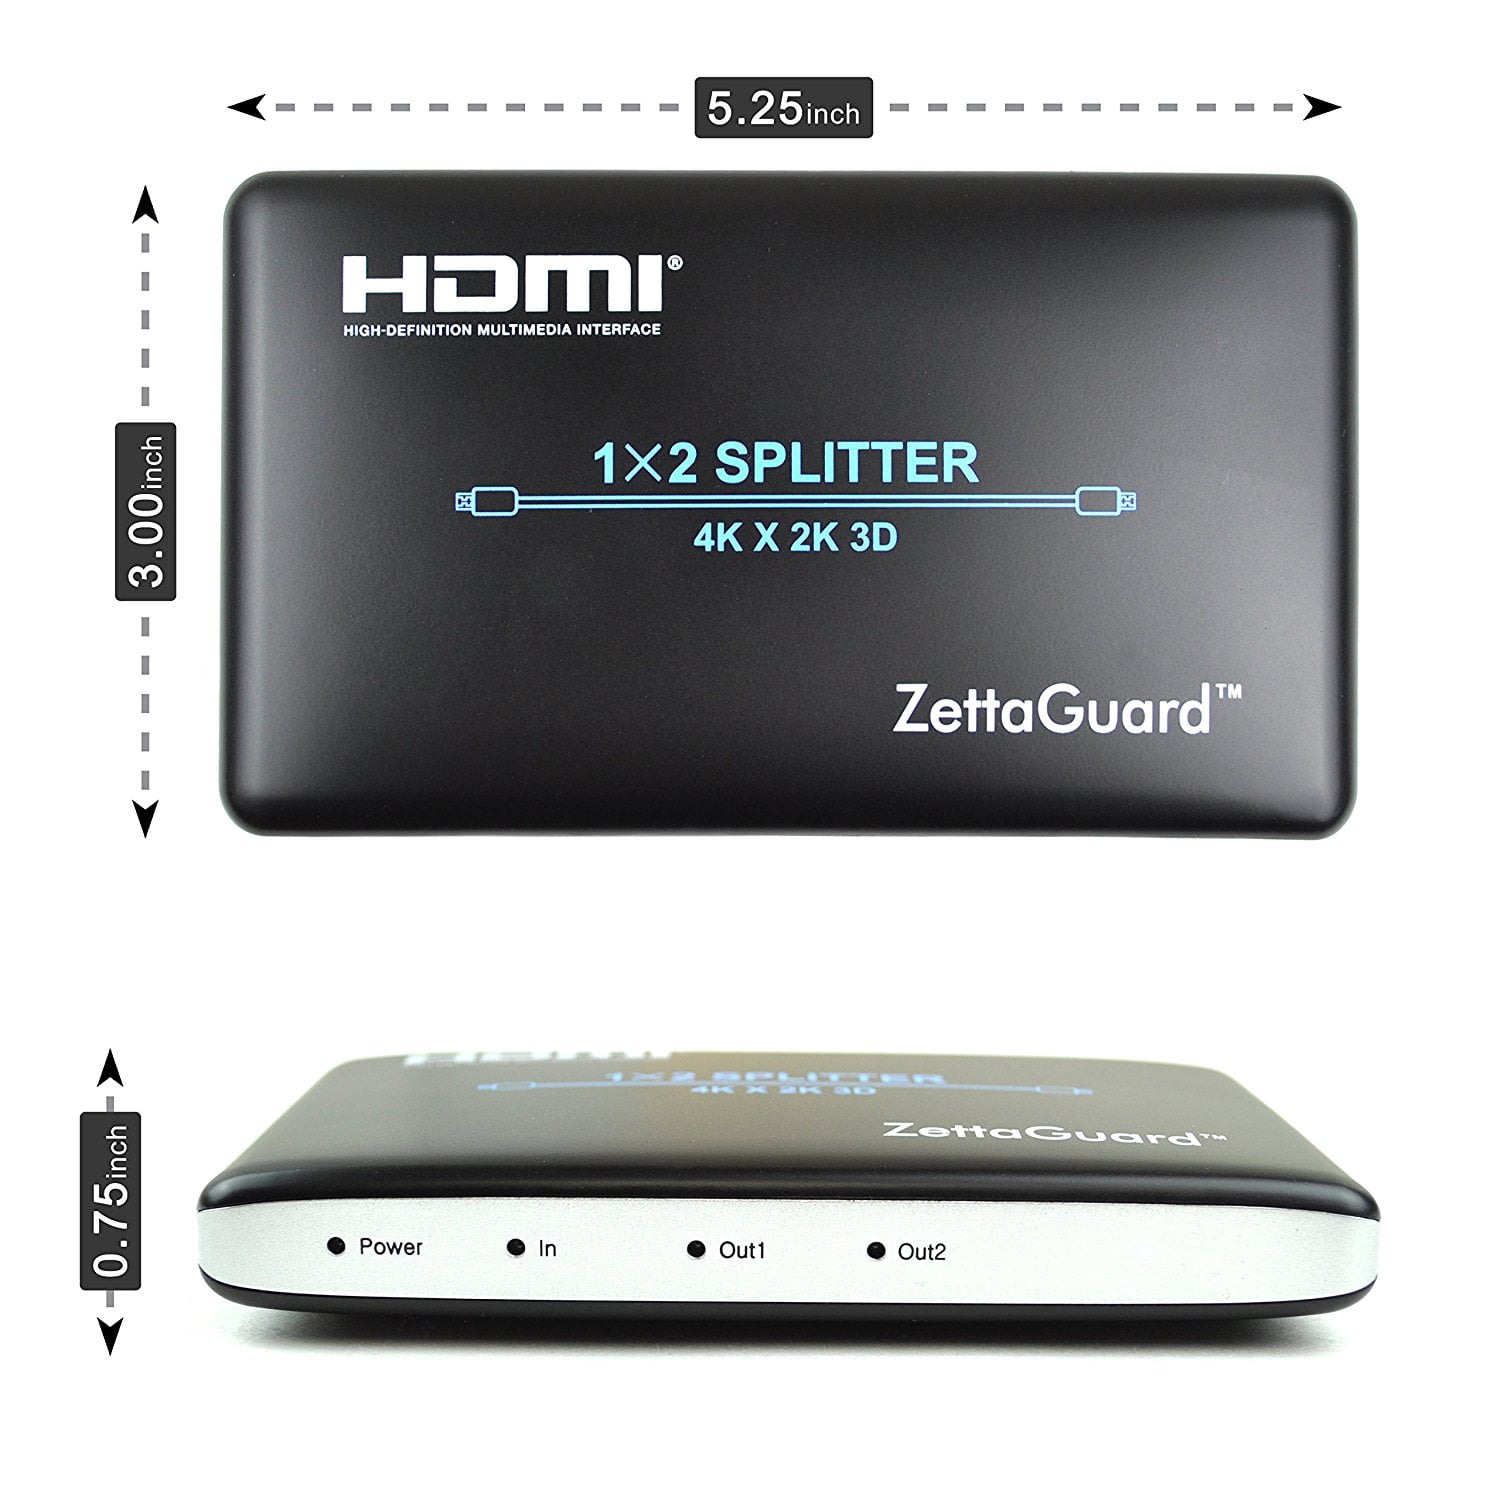 ZettaGuard 1 x 4 HDMI Splitter 1 In 4 Out with Full HD 4K x 2K 